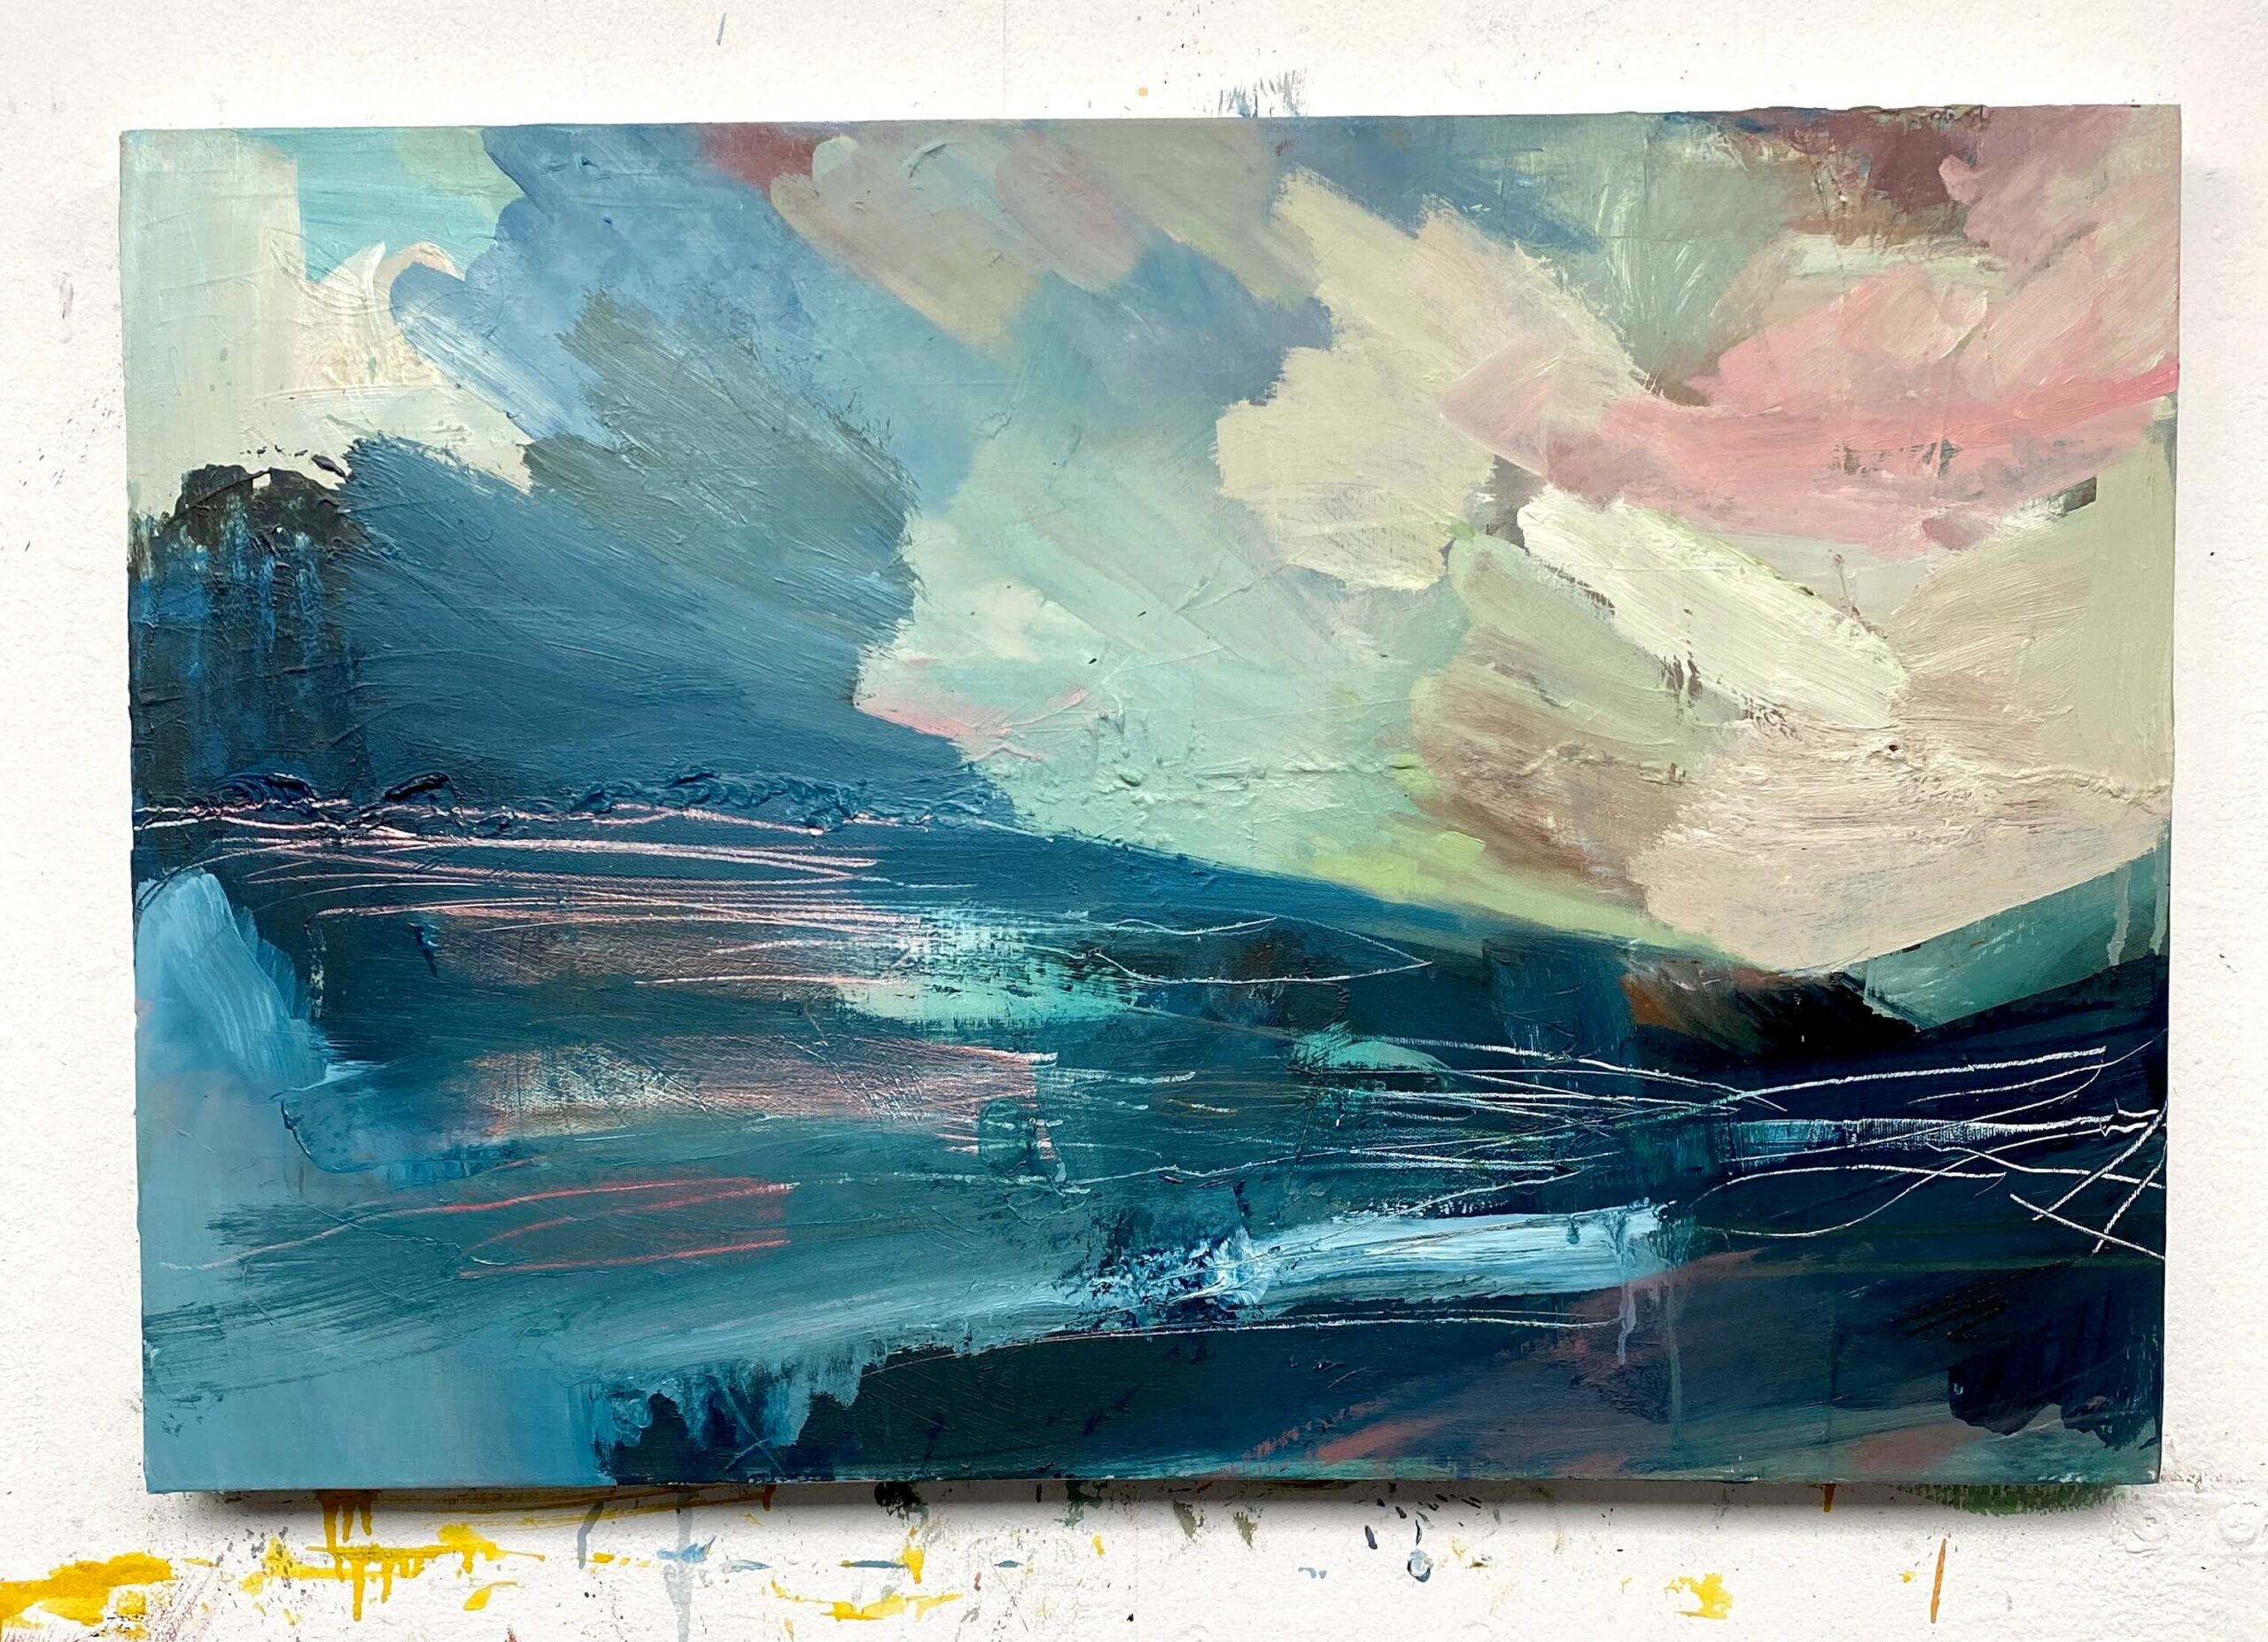 No.11 Pale Shelter Unframed Oil on canvas 76cm x 51cm £